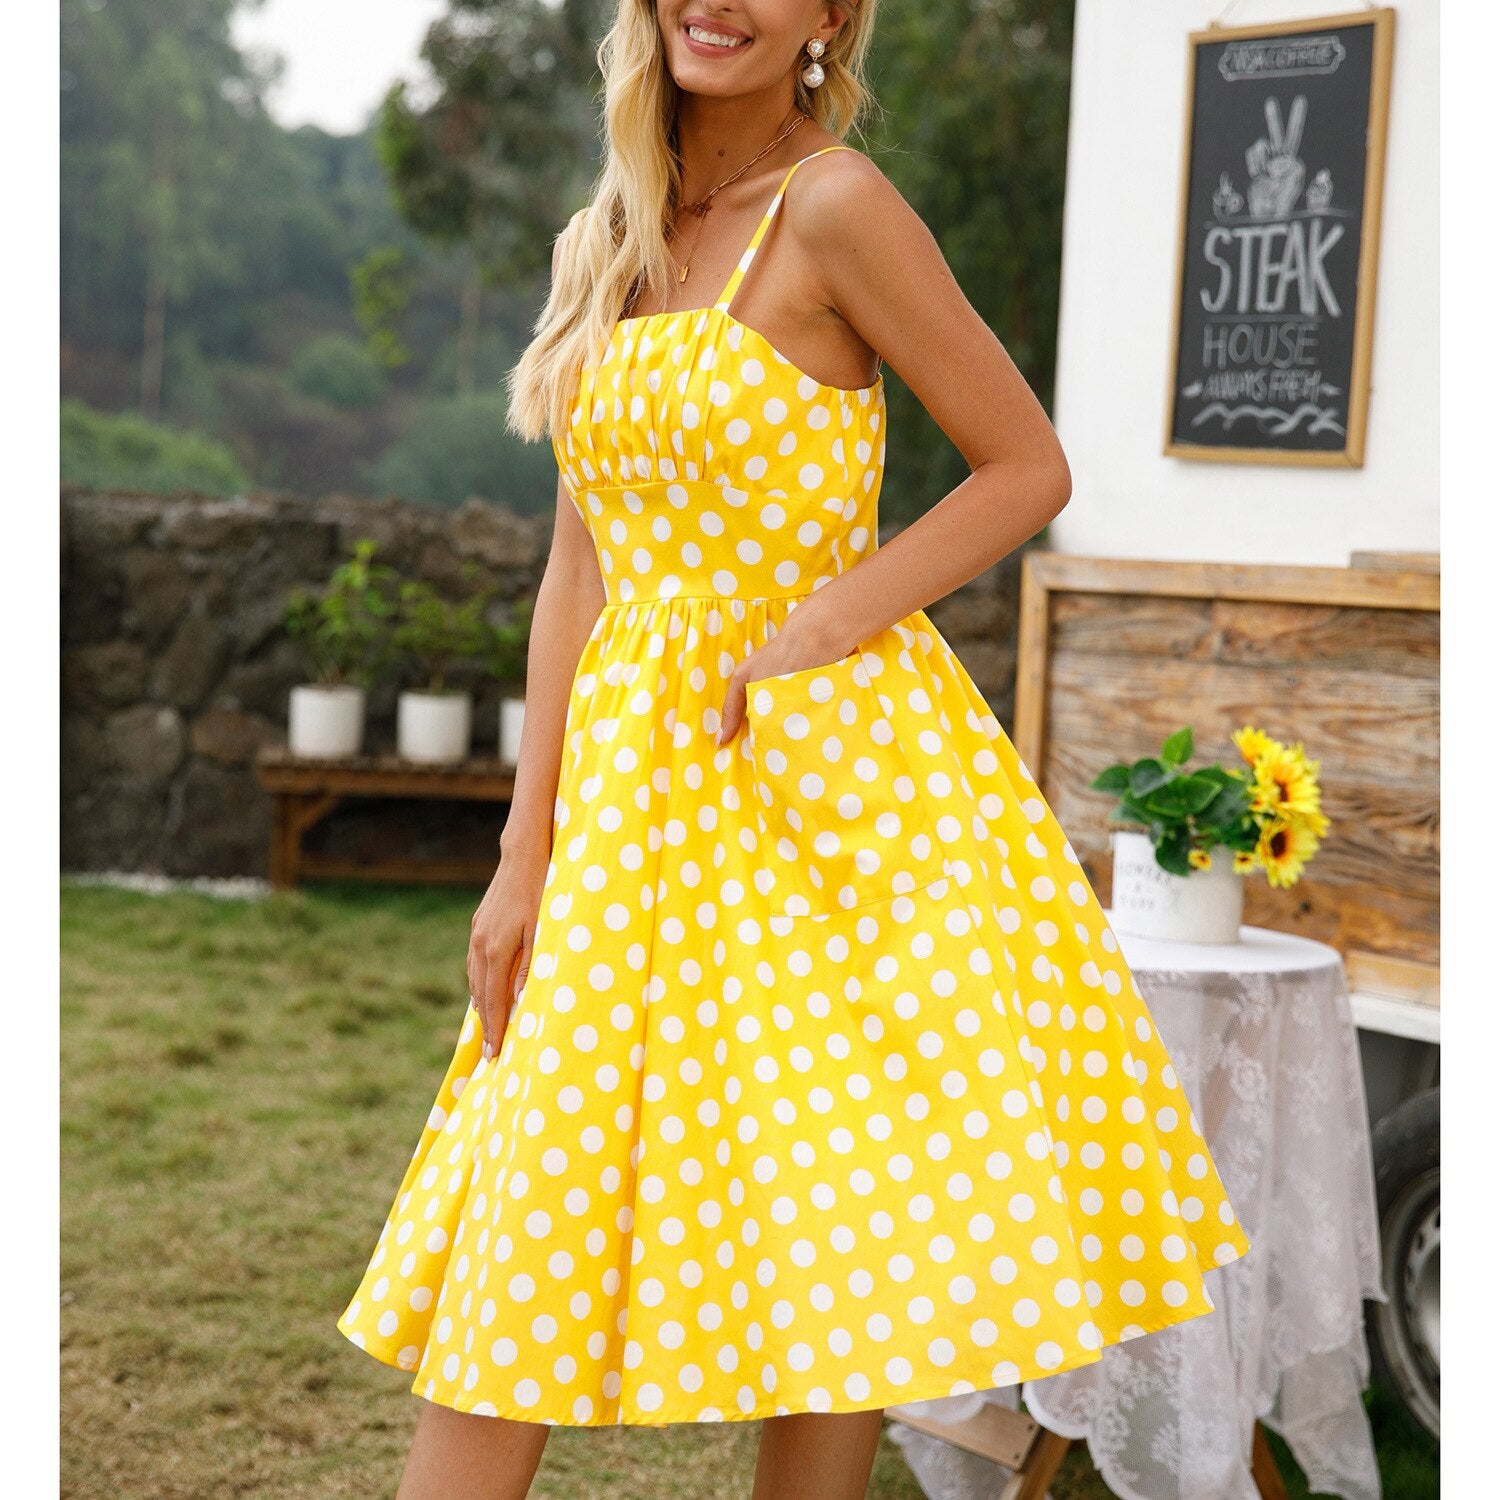 Sexy Spaghetti Straps Women Summer Dress Office Polka Dot Retro Vintage Plus Size Streetwear Sleeveless Swing Party Sundress